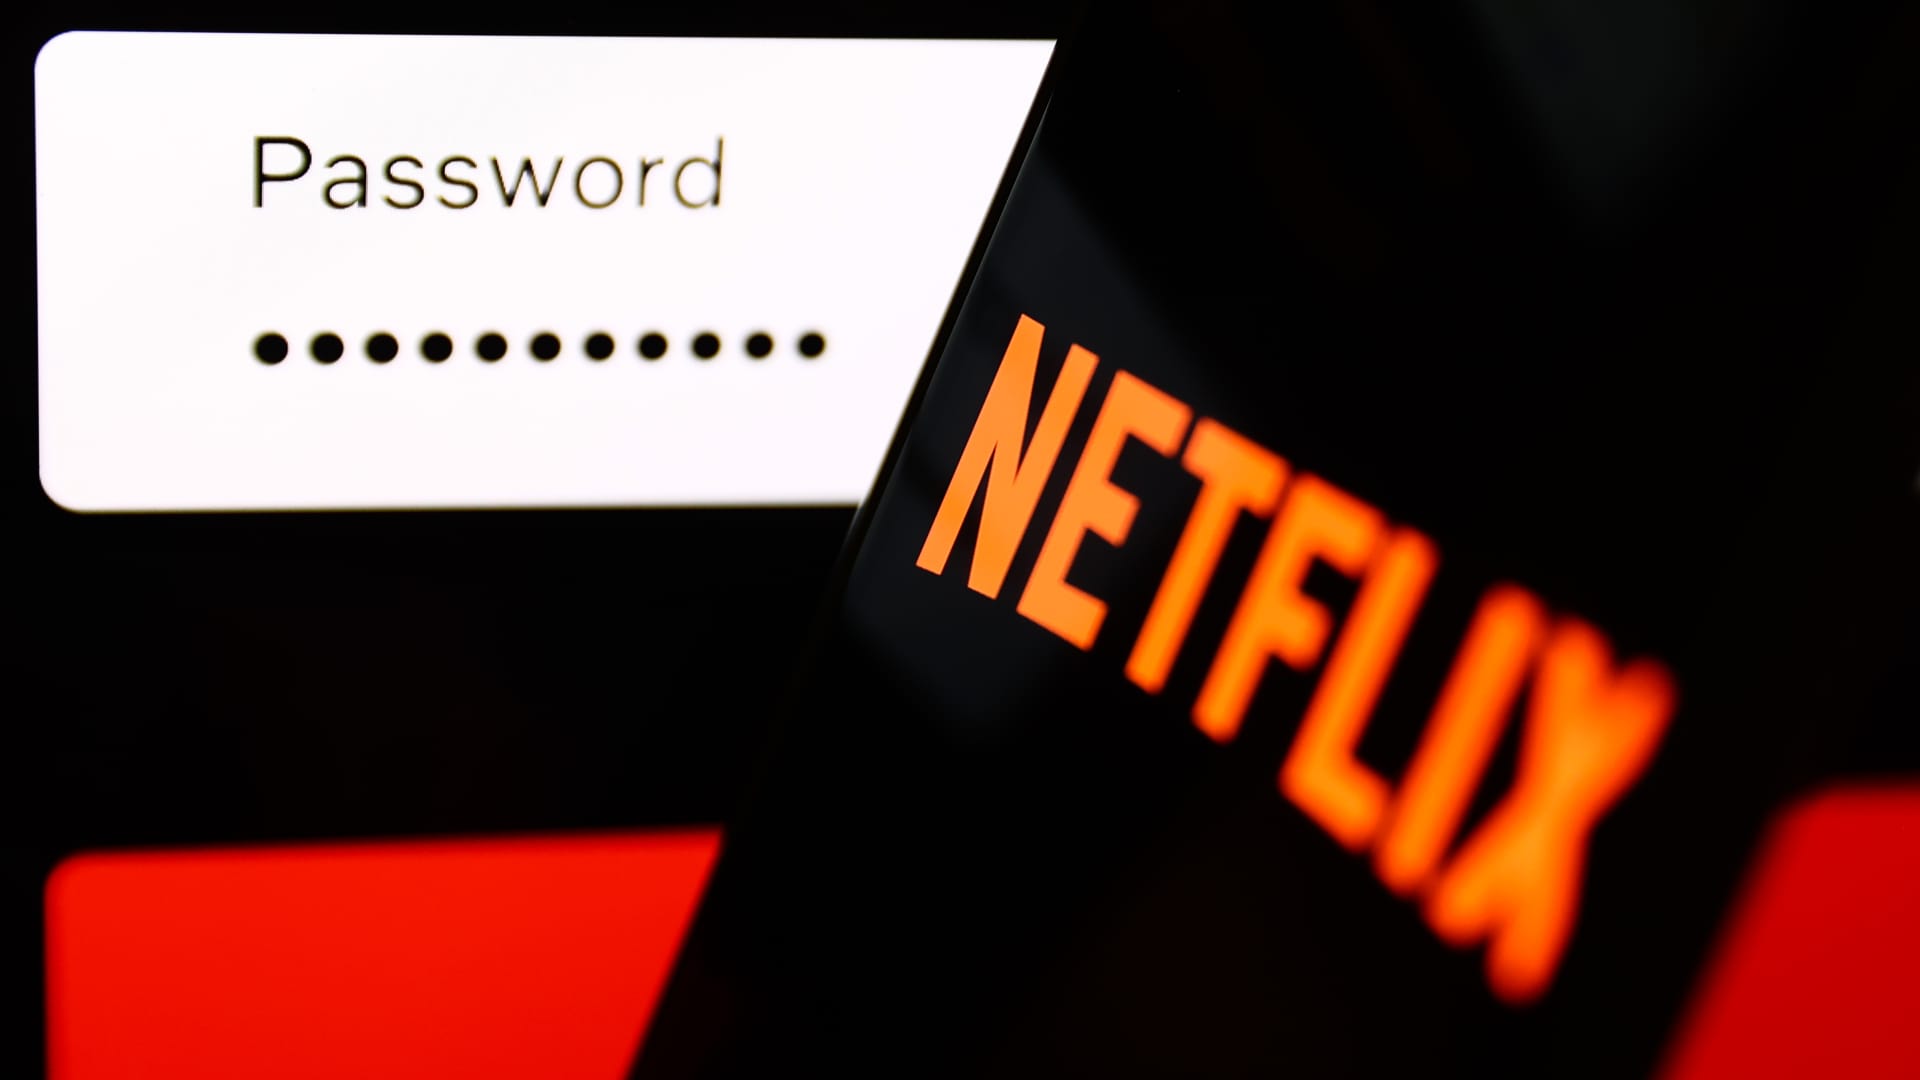 Netflix password sharing crackdown starts in U.S.